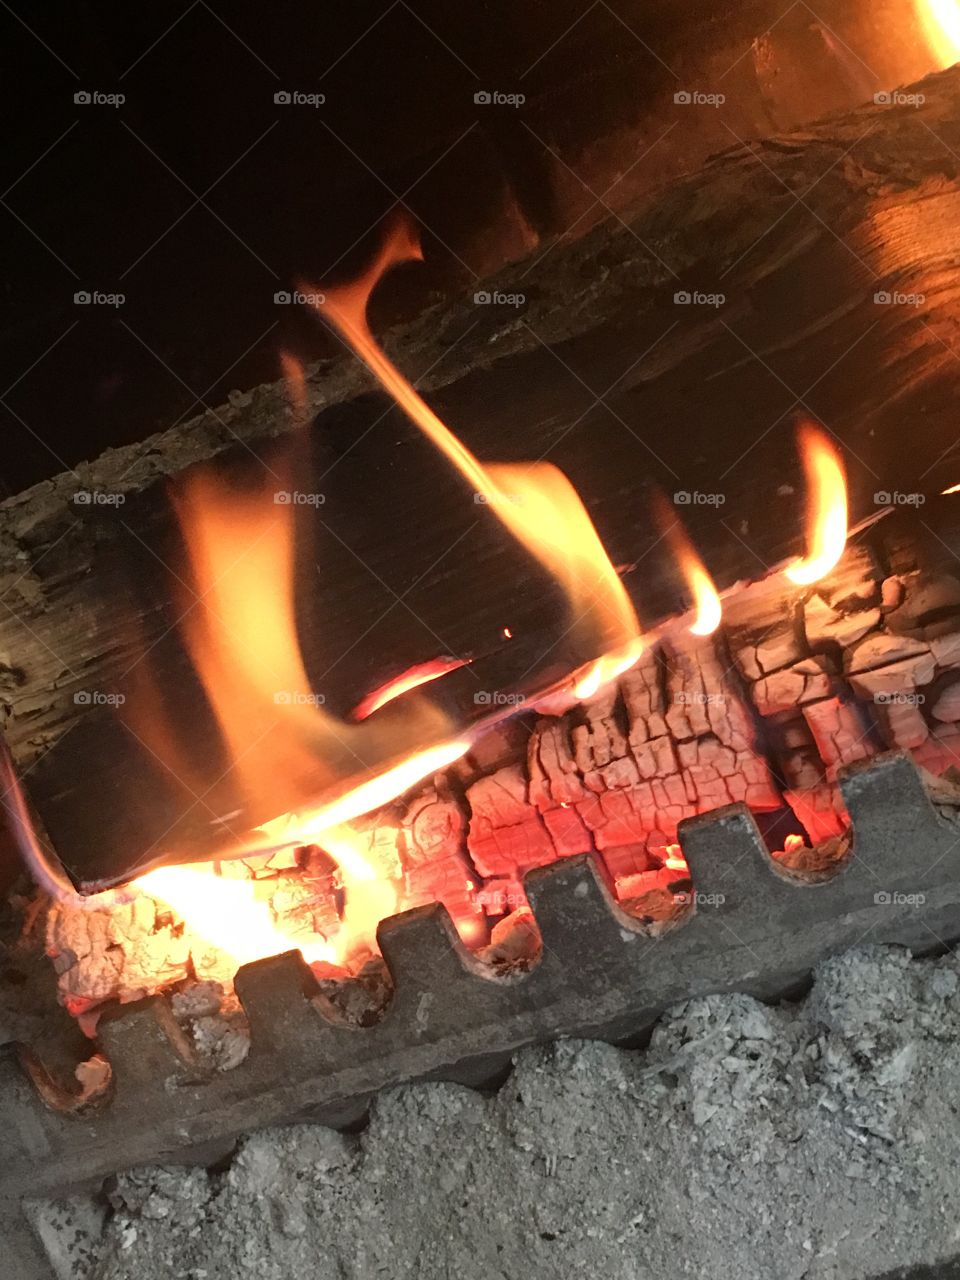 A fire burns in a fireplace.